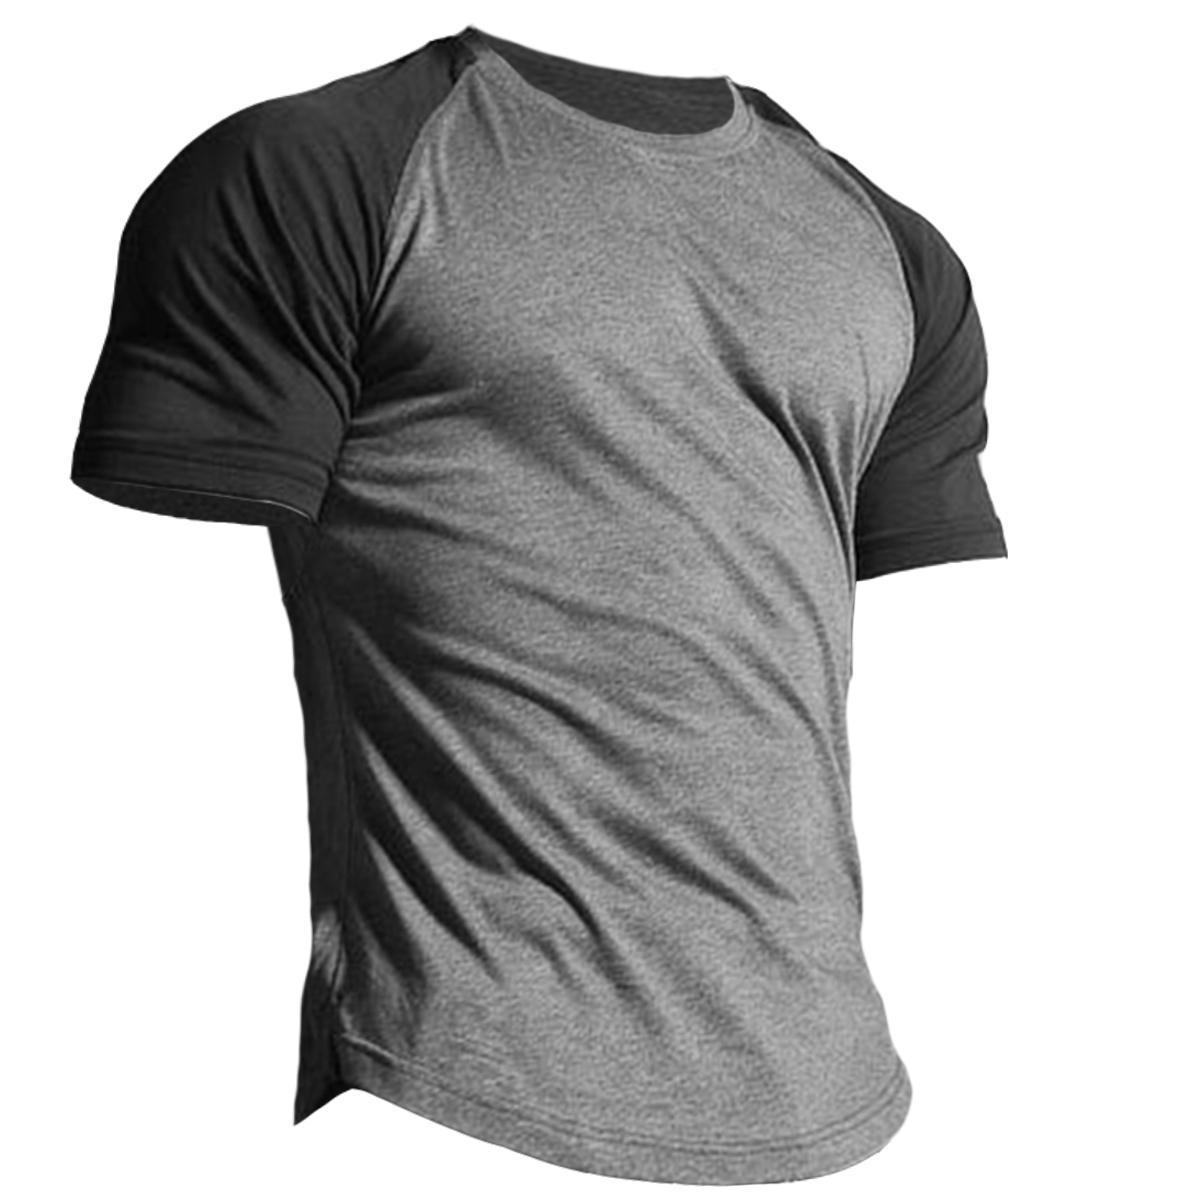 Men's Vintage Short Sleeve Chic T-shirt